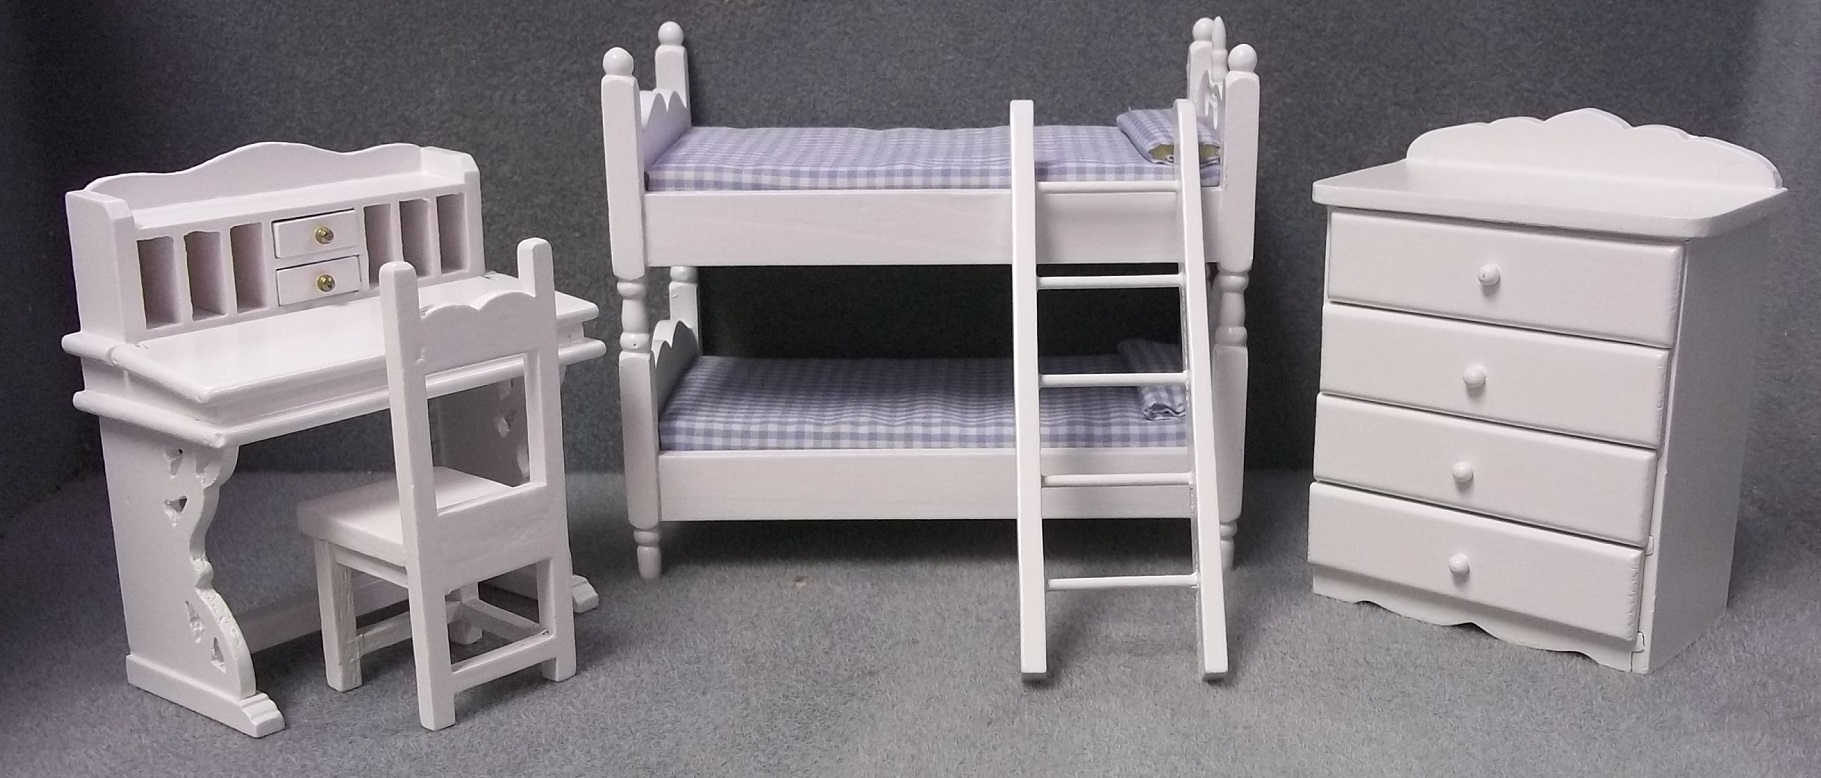 Bunk Bed Set w/ Desk - White - 5pc